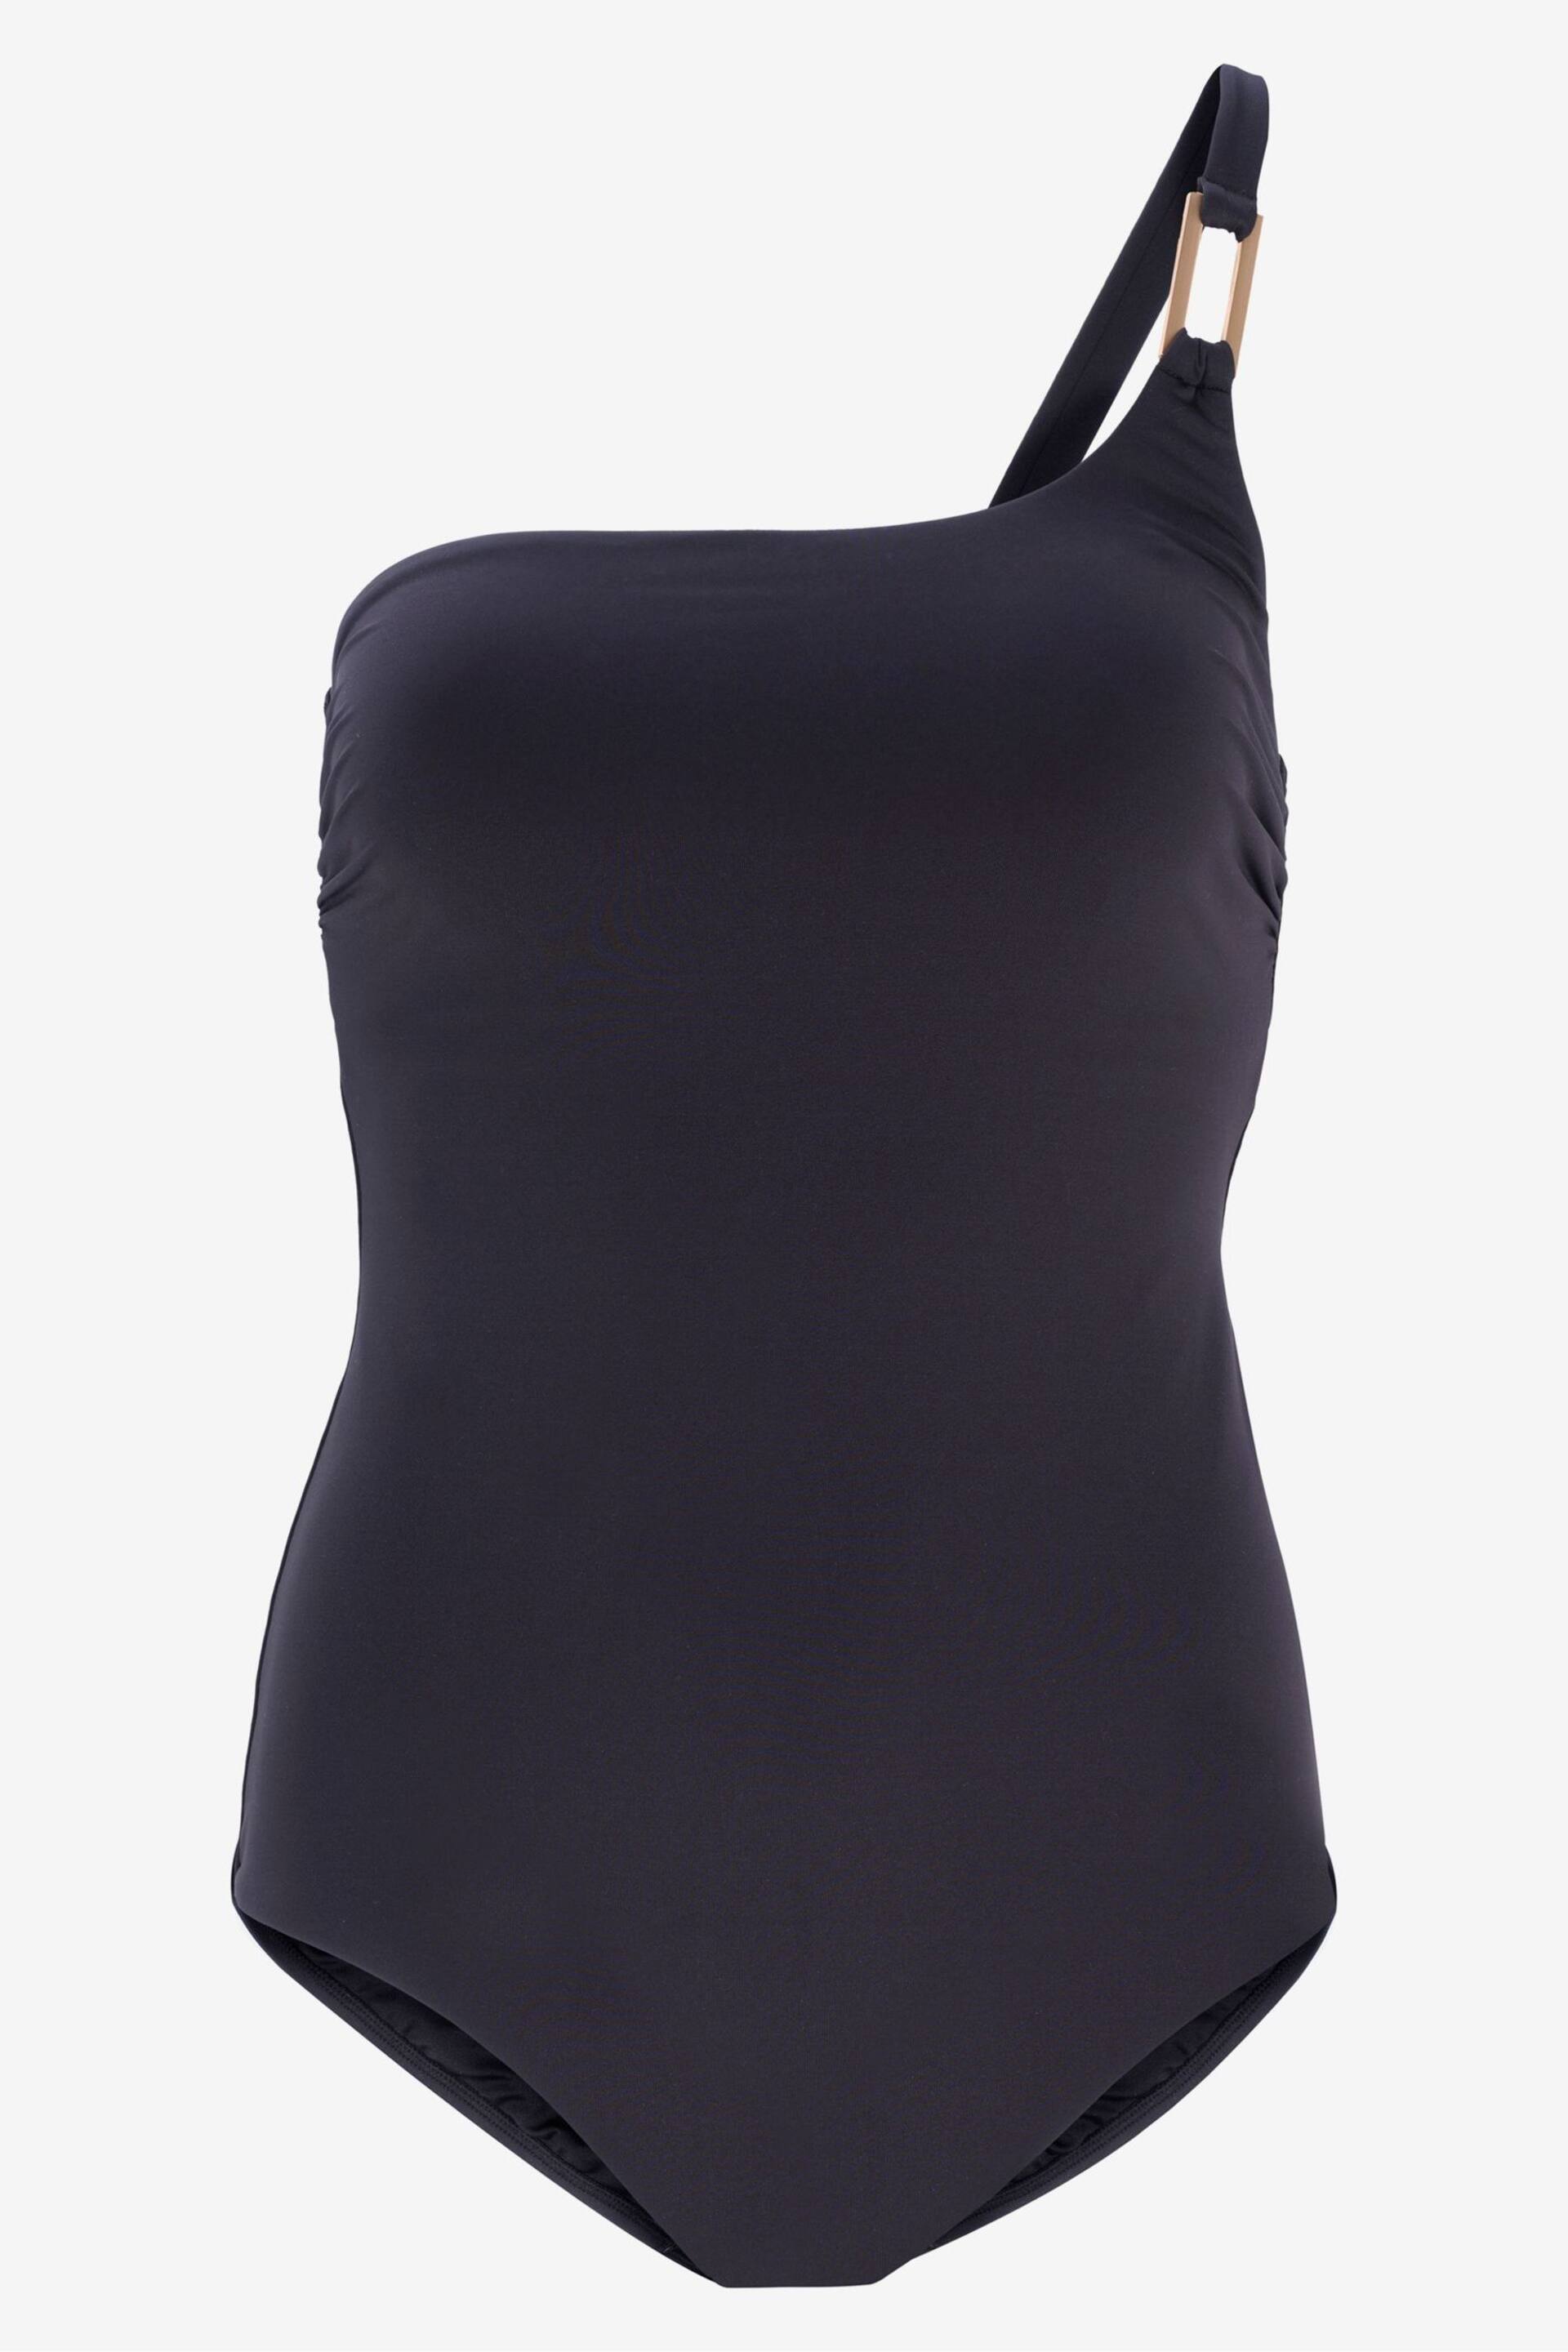 Mint Velvet Black One Shoulder Tummy Control Swimsuit - Image 4 of 5